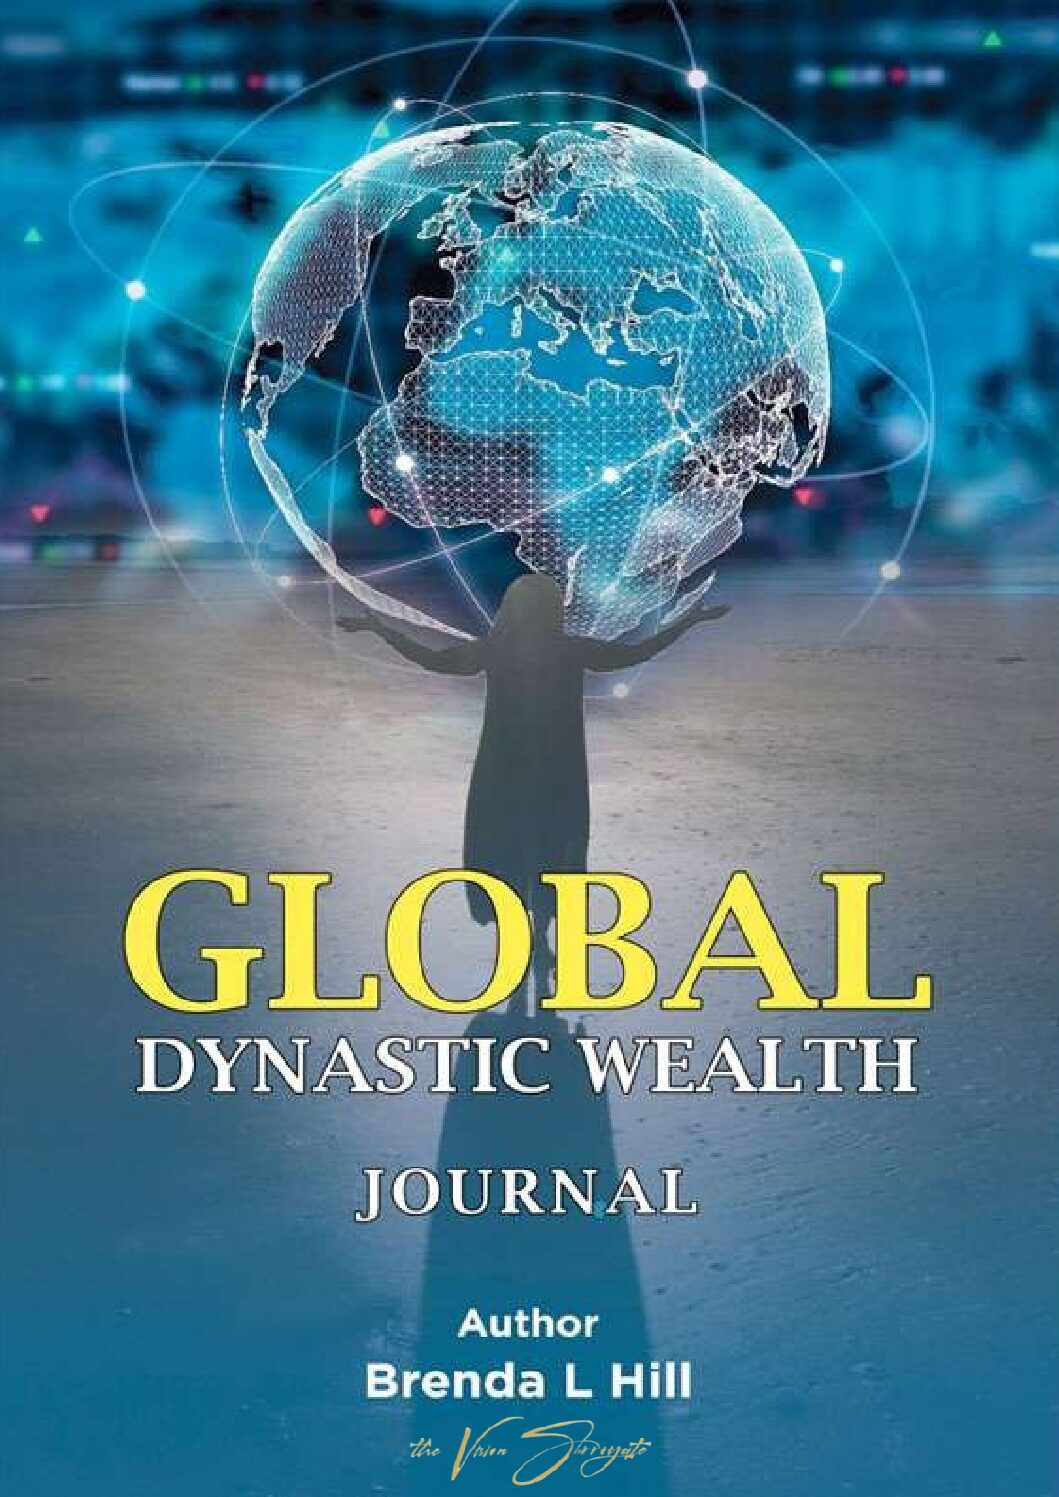 Global Dynastic Wealth (Journal)